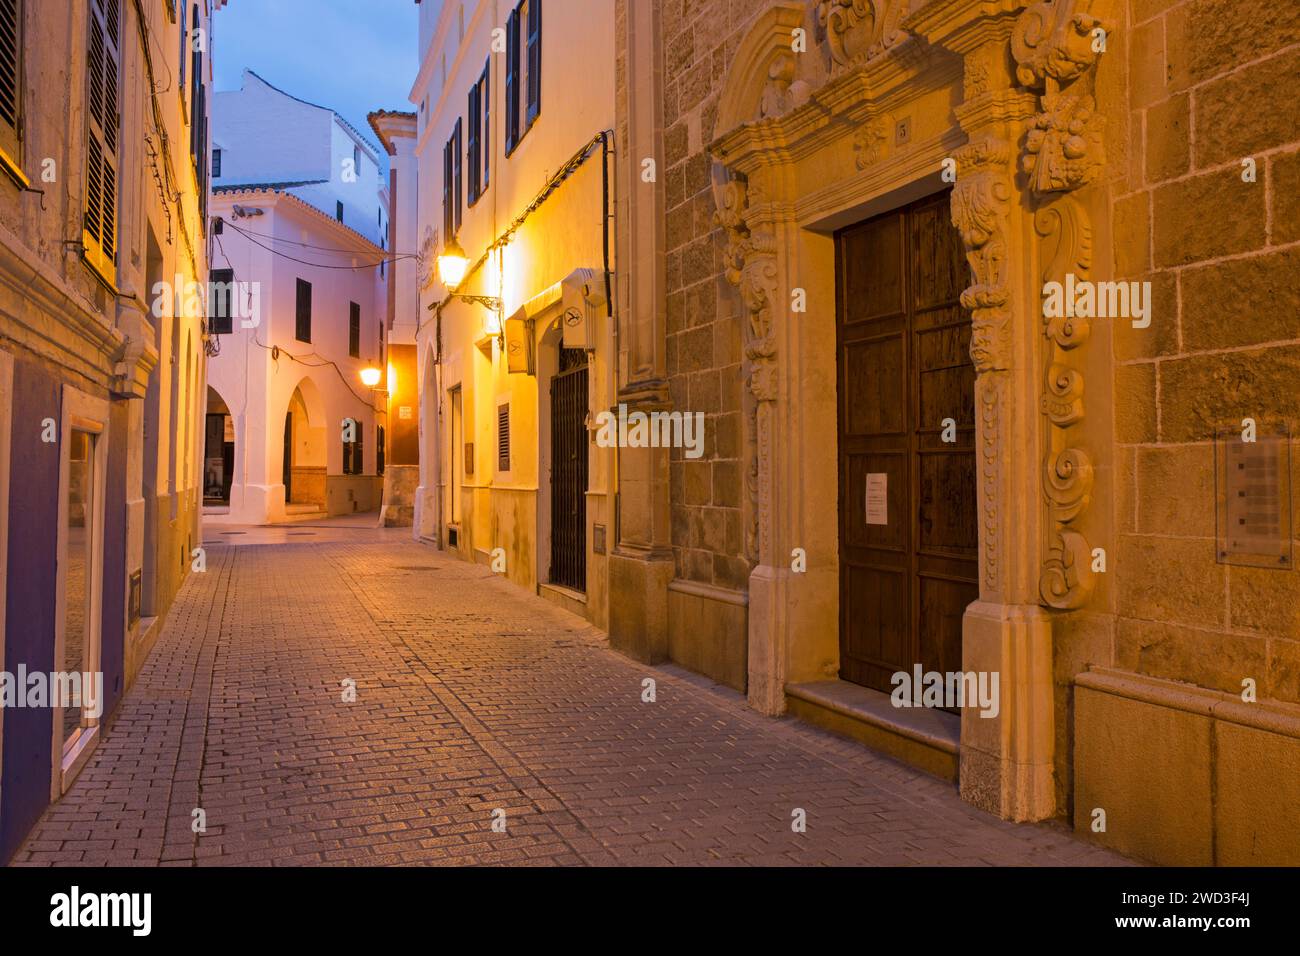 Ciutadella, Menorca, Balearic Islands, Spain. View along illuminated Old Town street, dawn, church door prominent. Stock Photo